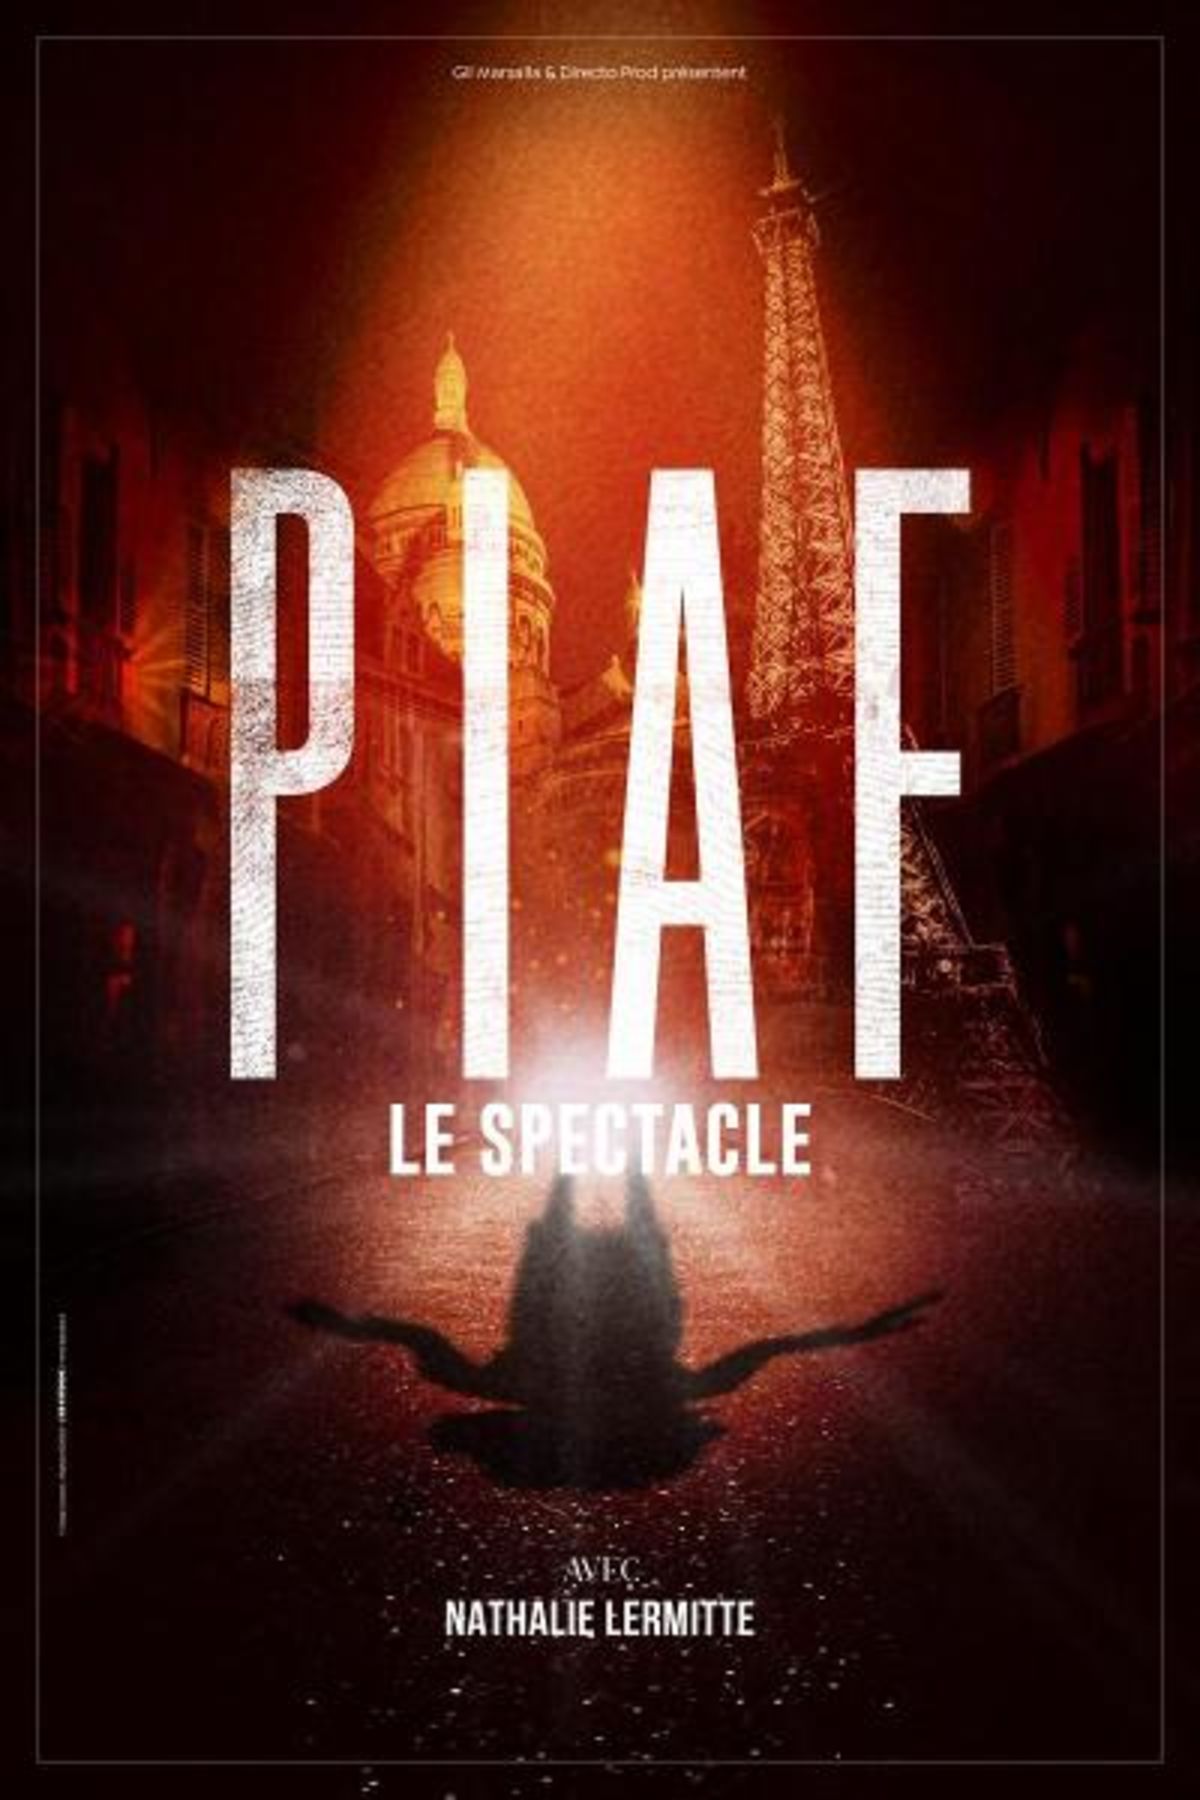 Piaf! Le Spectacle